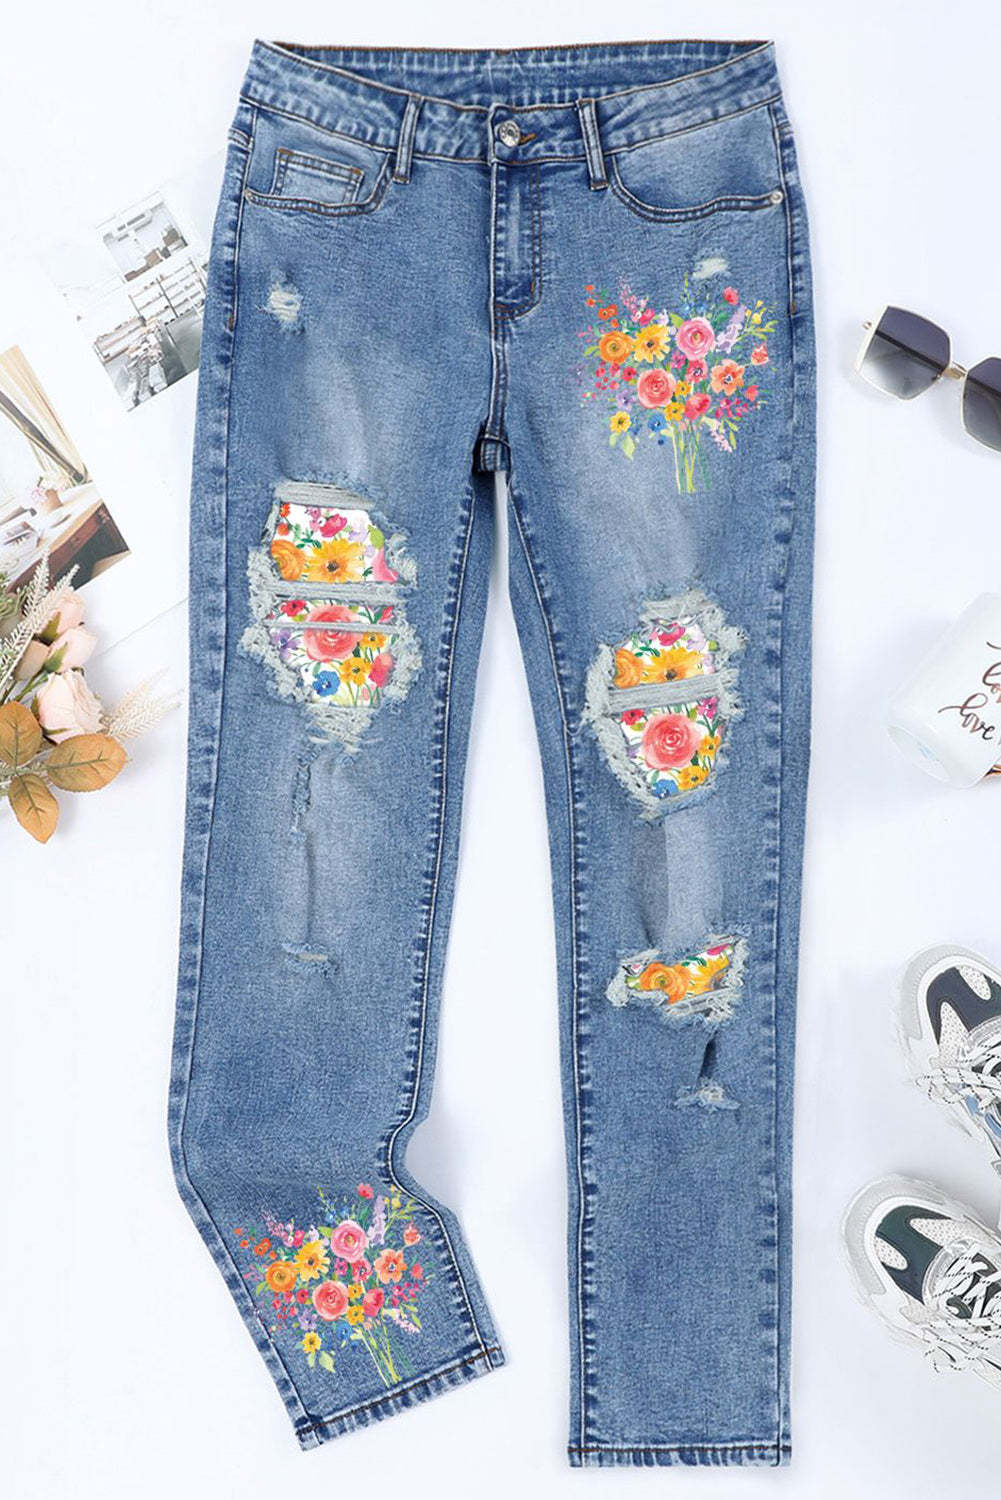 Floral Casual Denim Jeans $ 44.99 - Evaless